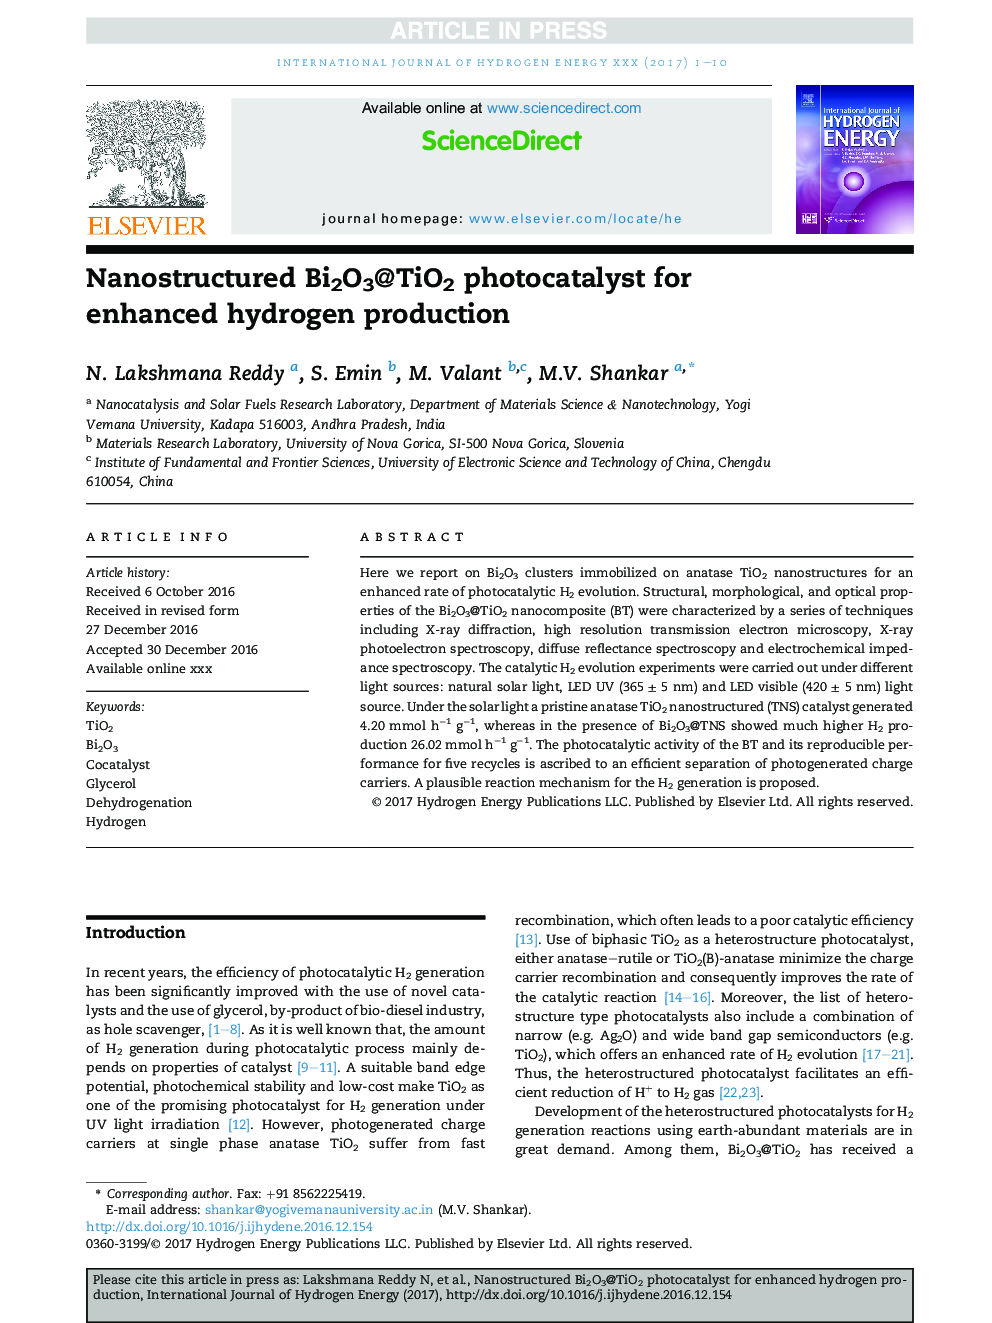 Nanostructured Bi2O3@TiO2 photocatalyst for enhanced hydrogen production